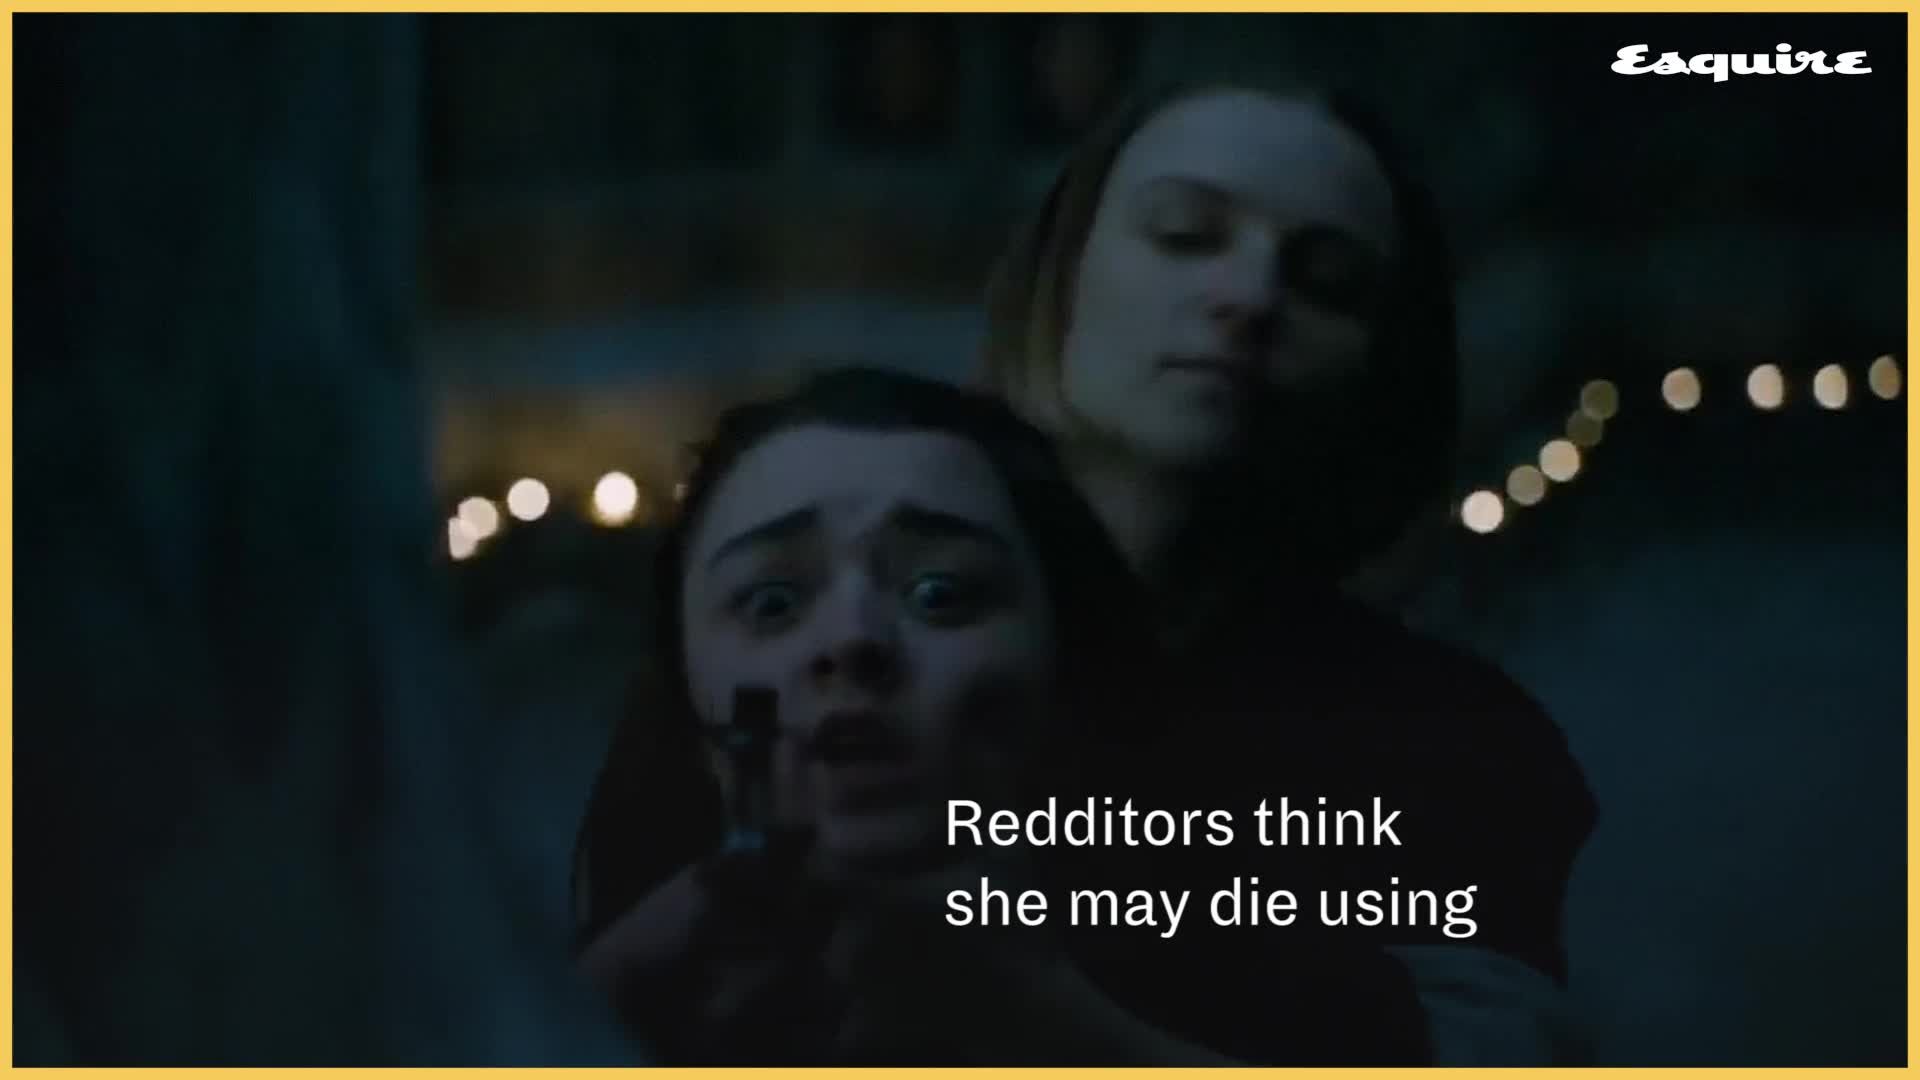 Arya, Gendry Sex Scene in Game of Thrones Season 8 Episode 2 Was Unnecessary